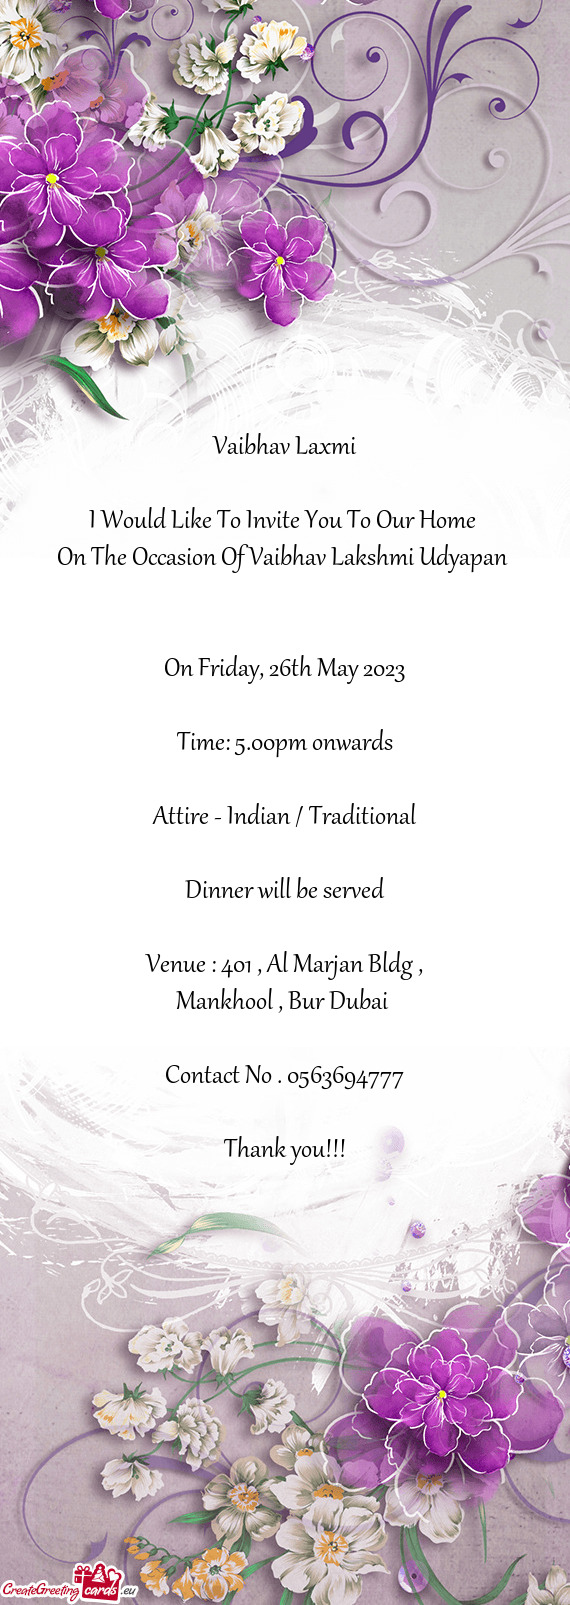 On The Occasion Of Vaibhav Lakshmi Udyapan